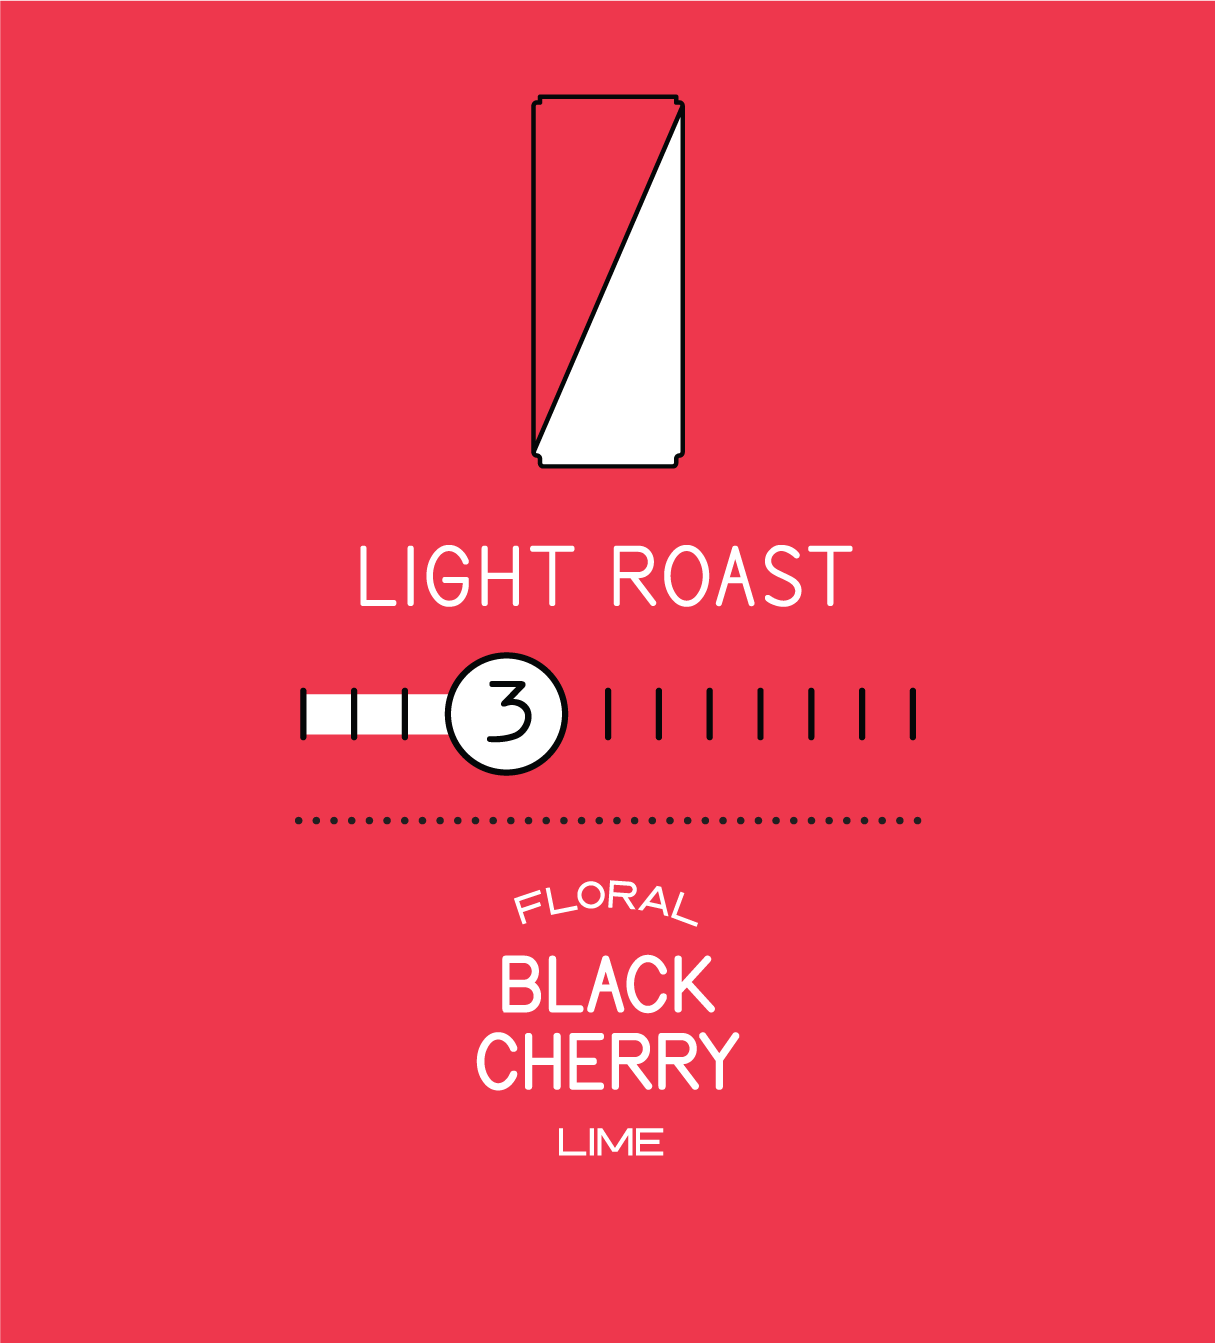 Light roast. Roast level 3. Floral, Black Cherry, Lime